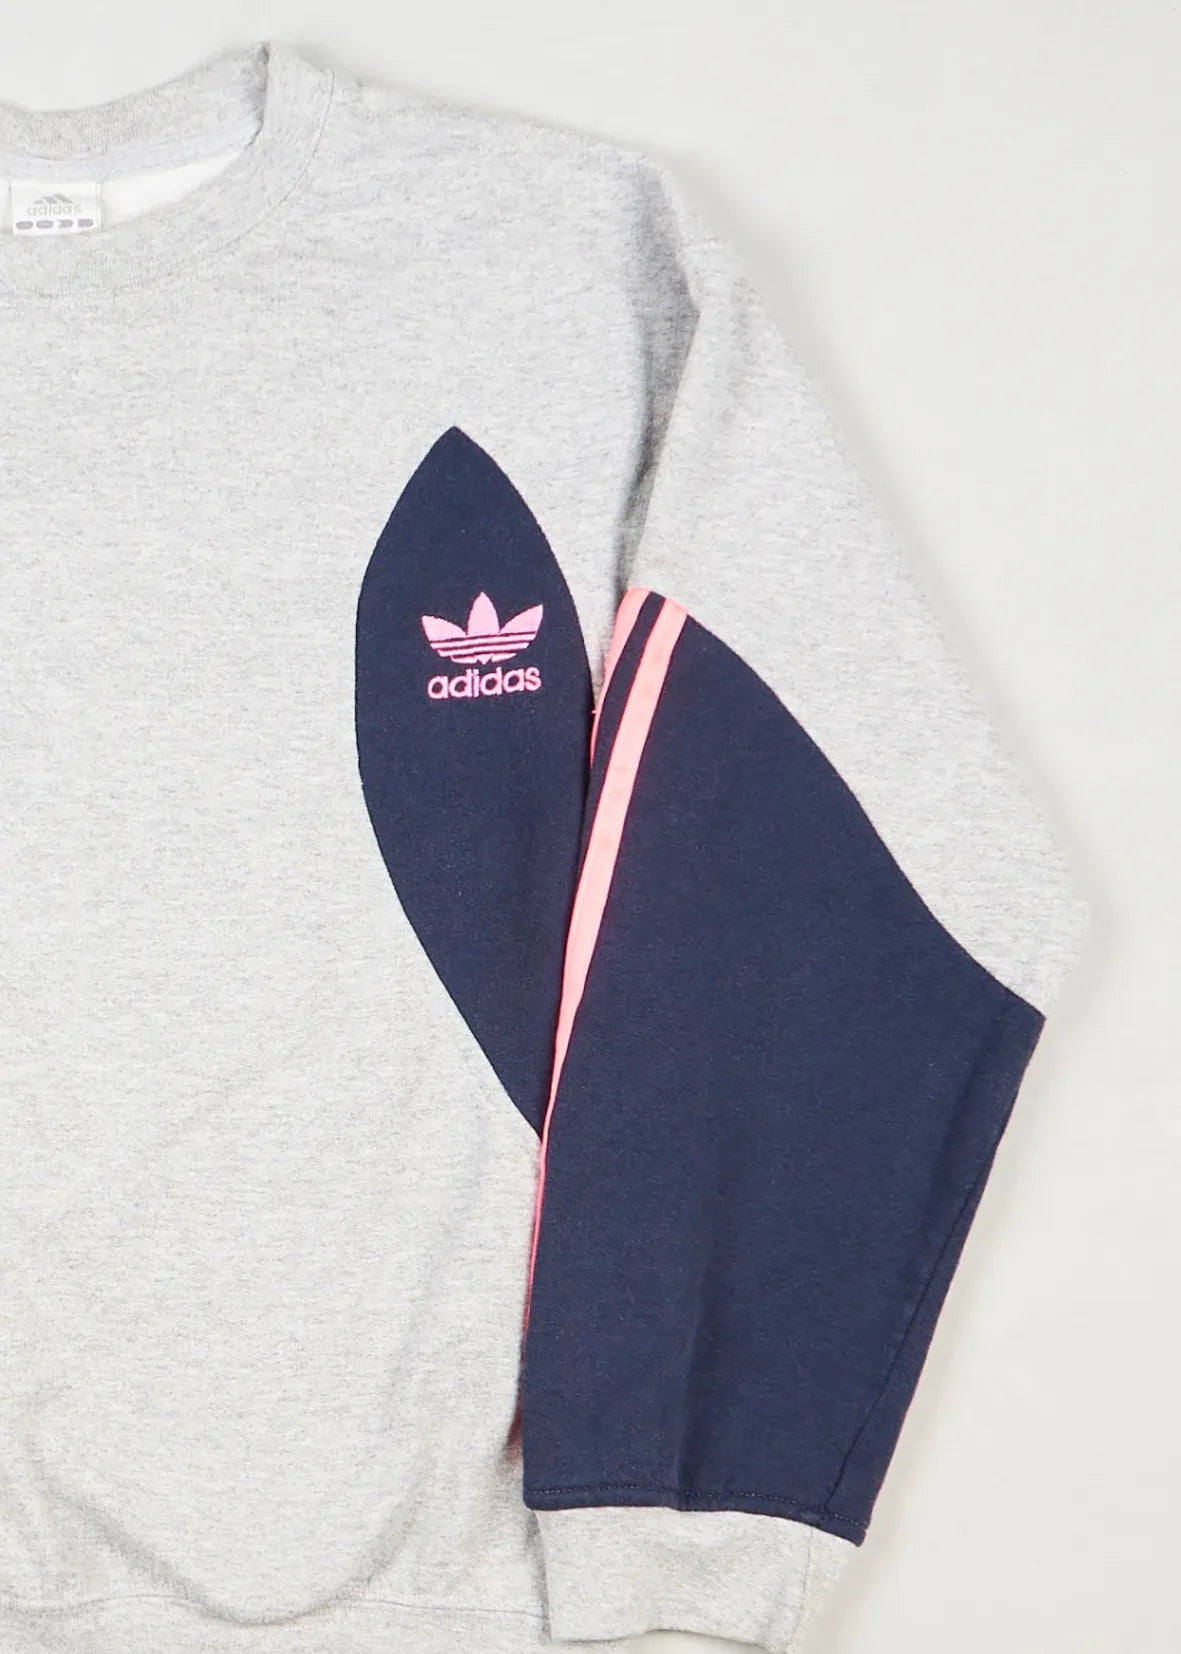 Adidas - Sweatshirt (S) Right